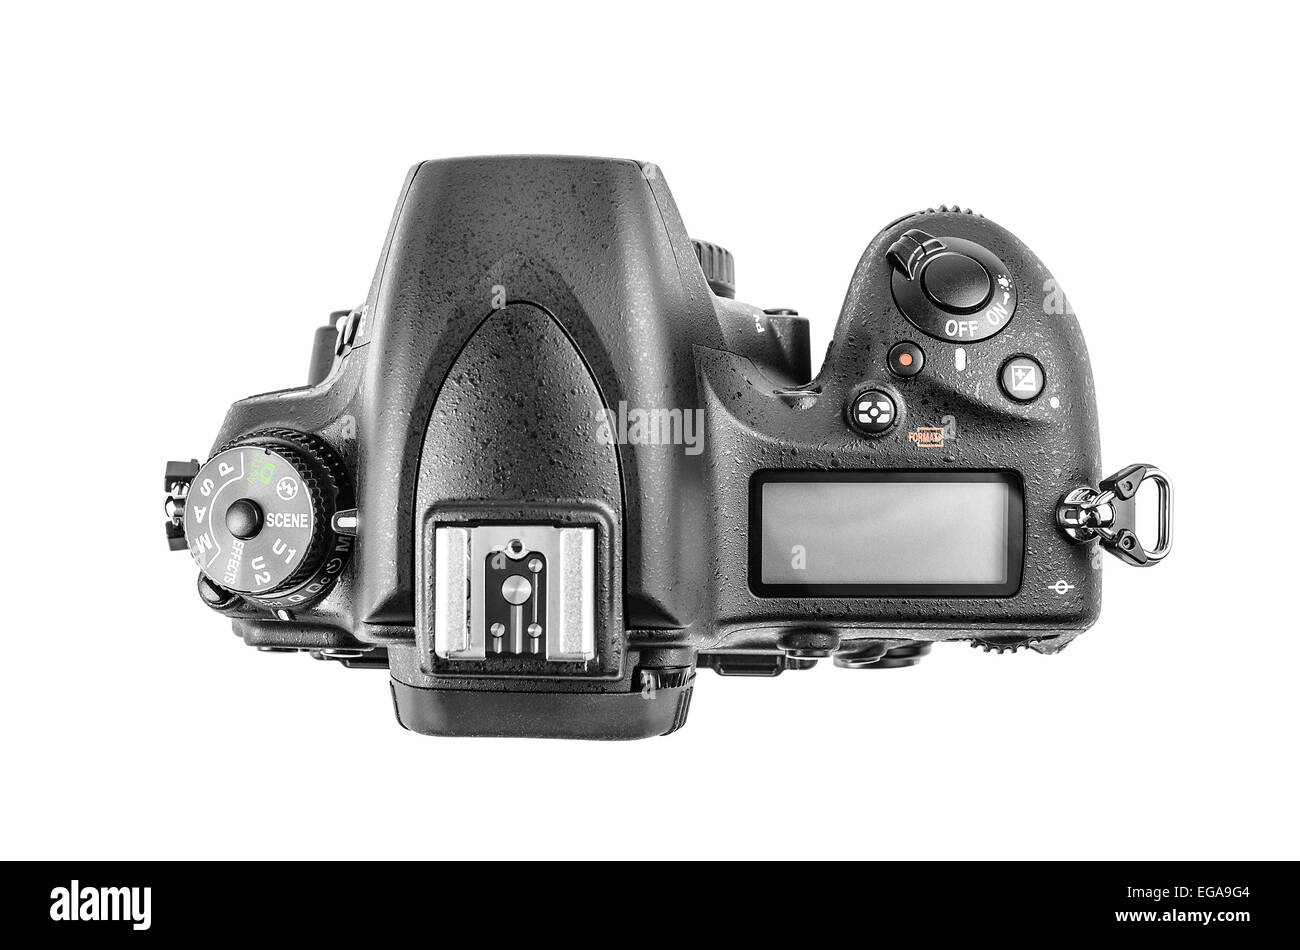 Nikon d750 hi-res stock photography and images - Alamy